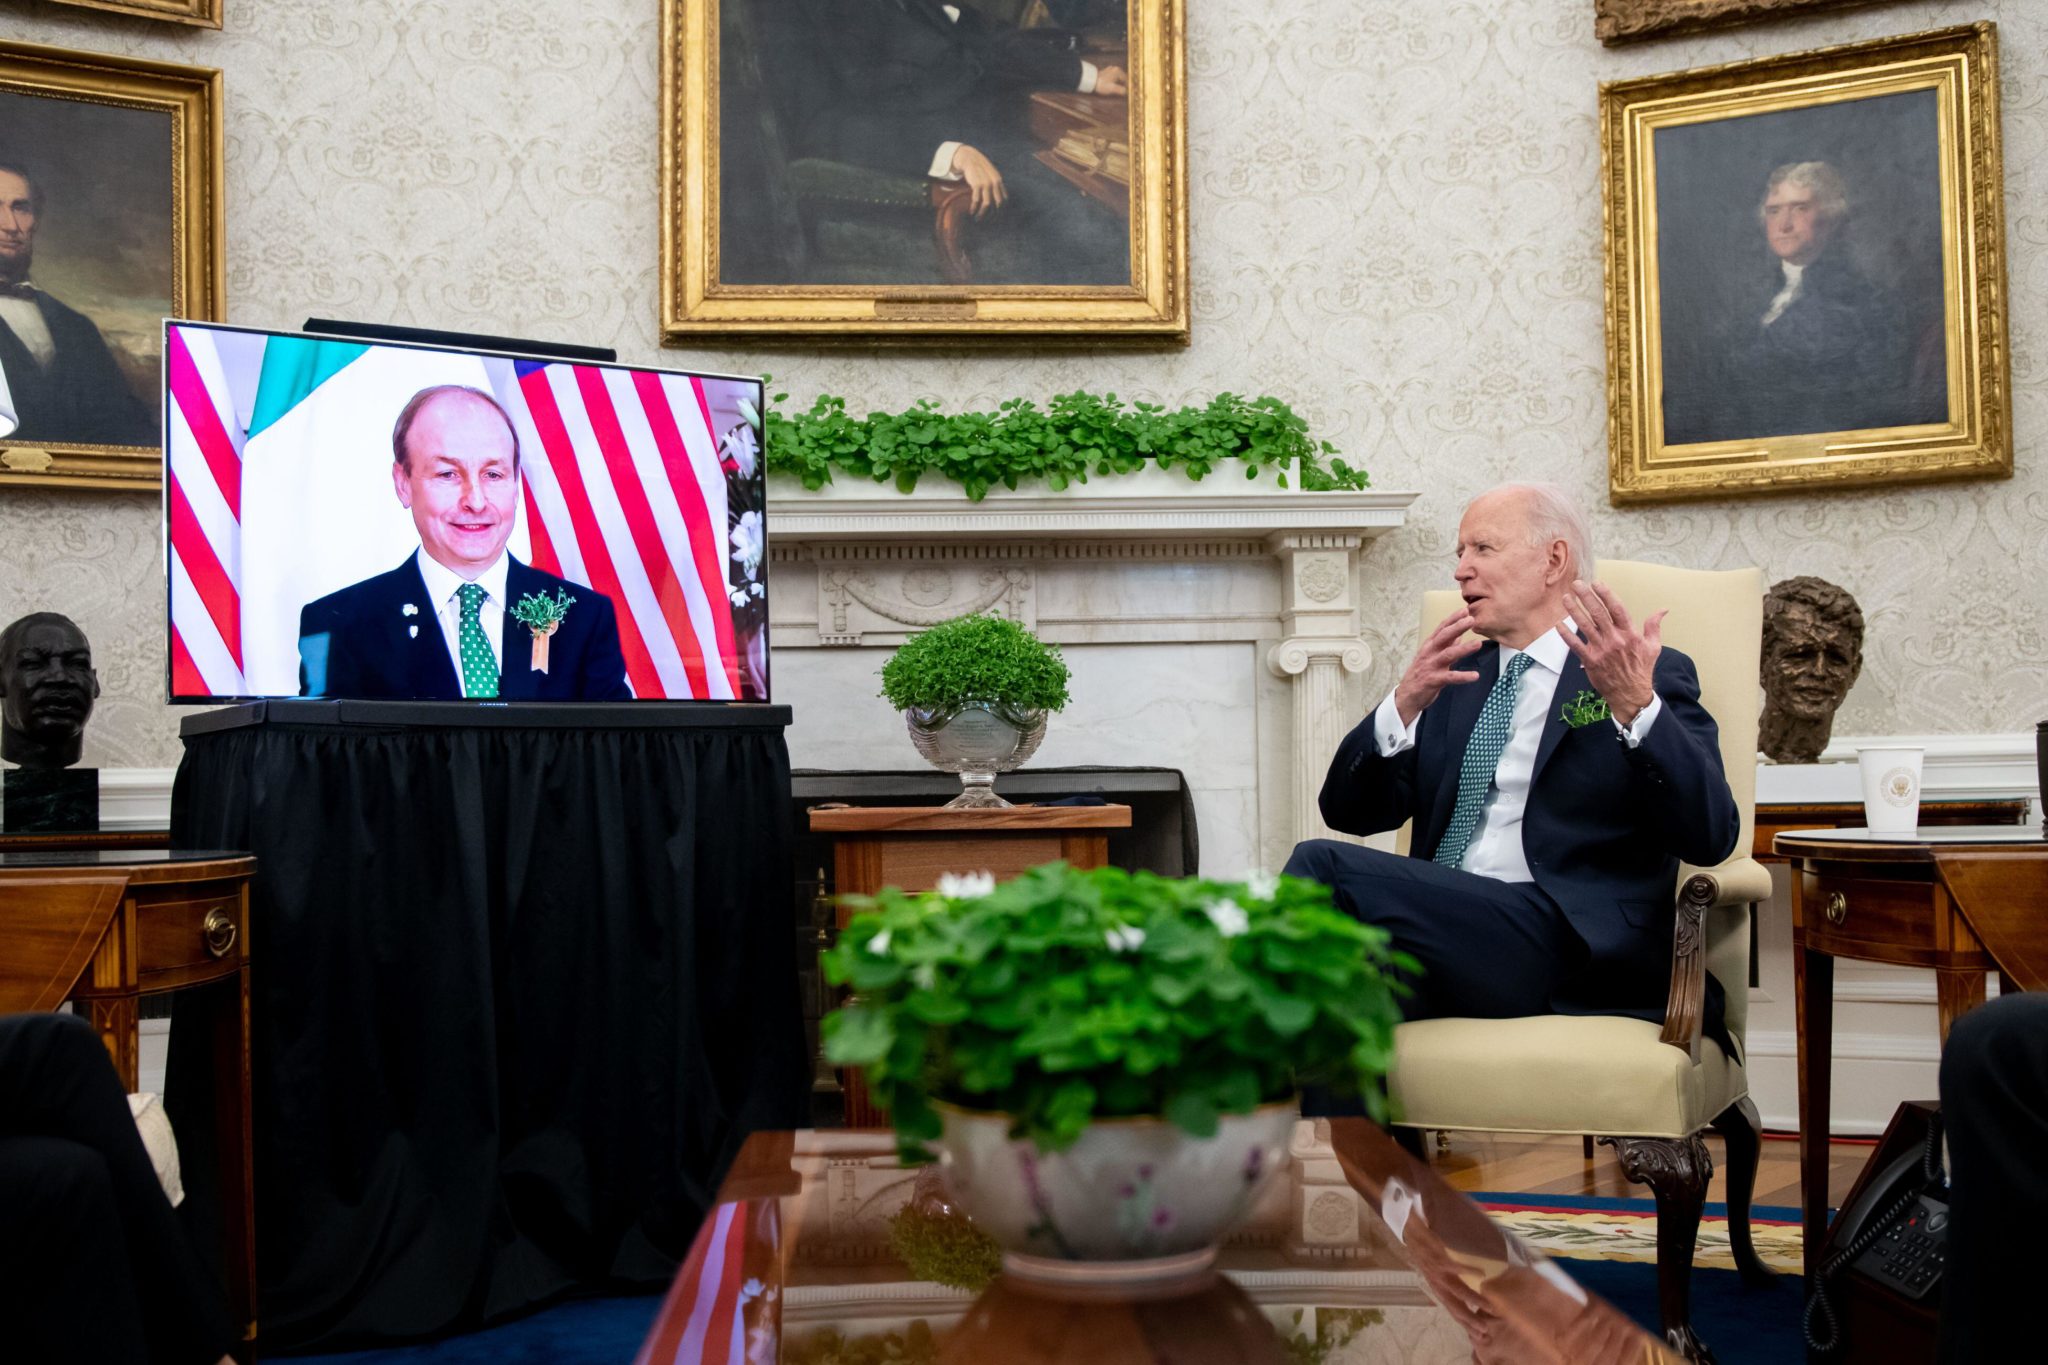 Taoiseach Micheál Martin virtually meets with US President Joe Biden in the Oval Office, 17-03-2021. Image: Erin Scott/Pool via CNP /MediaPunch